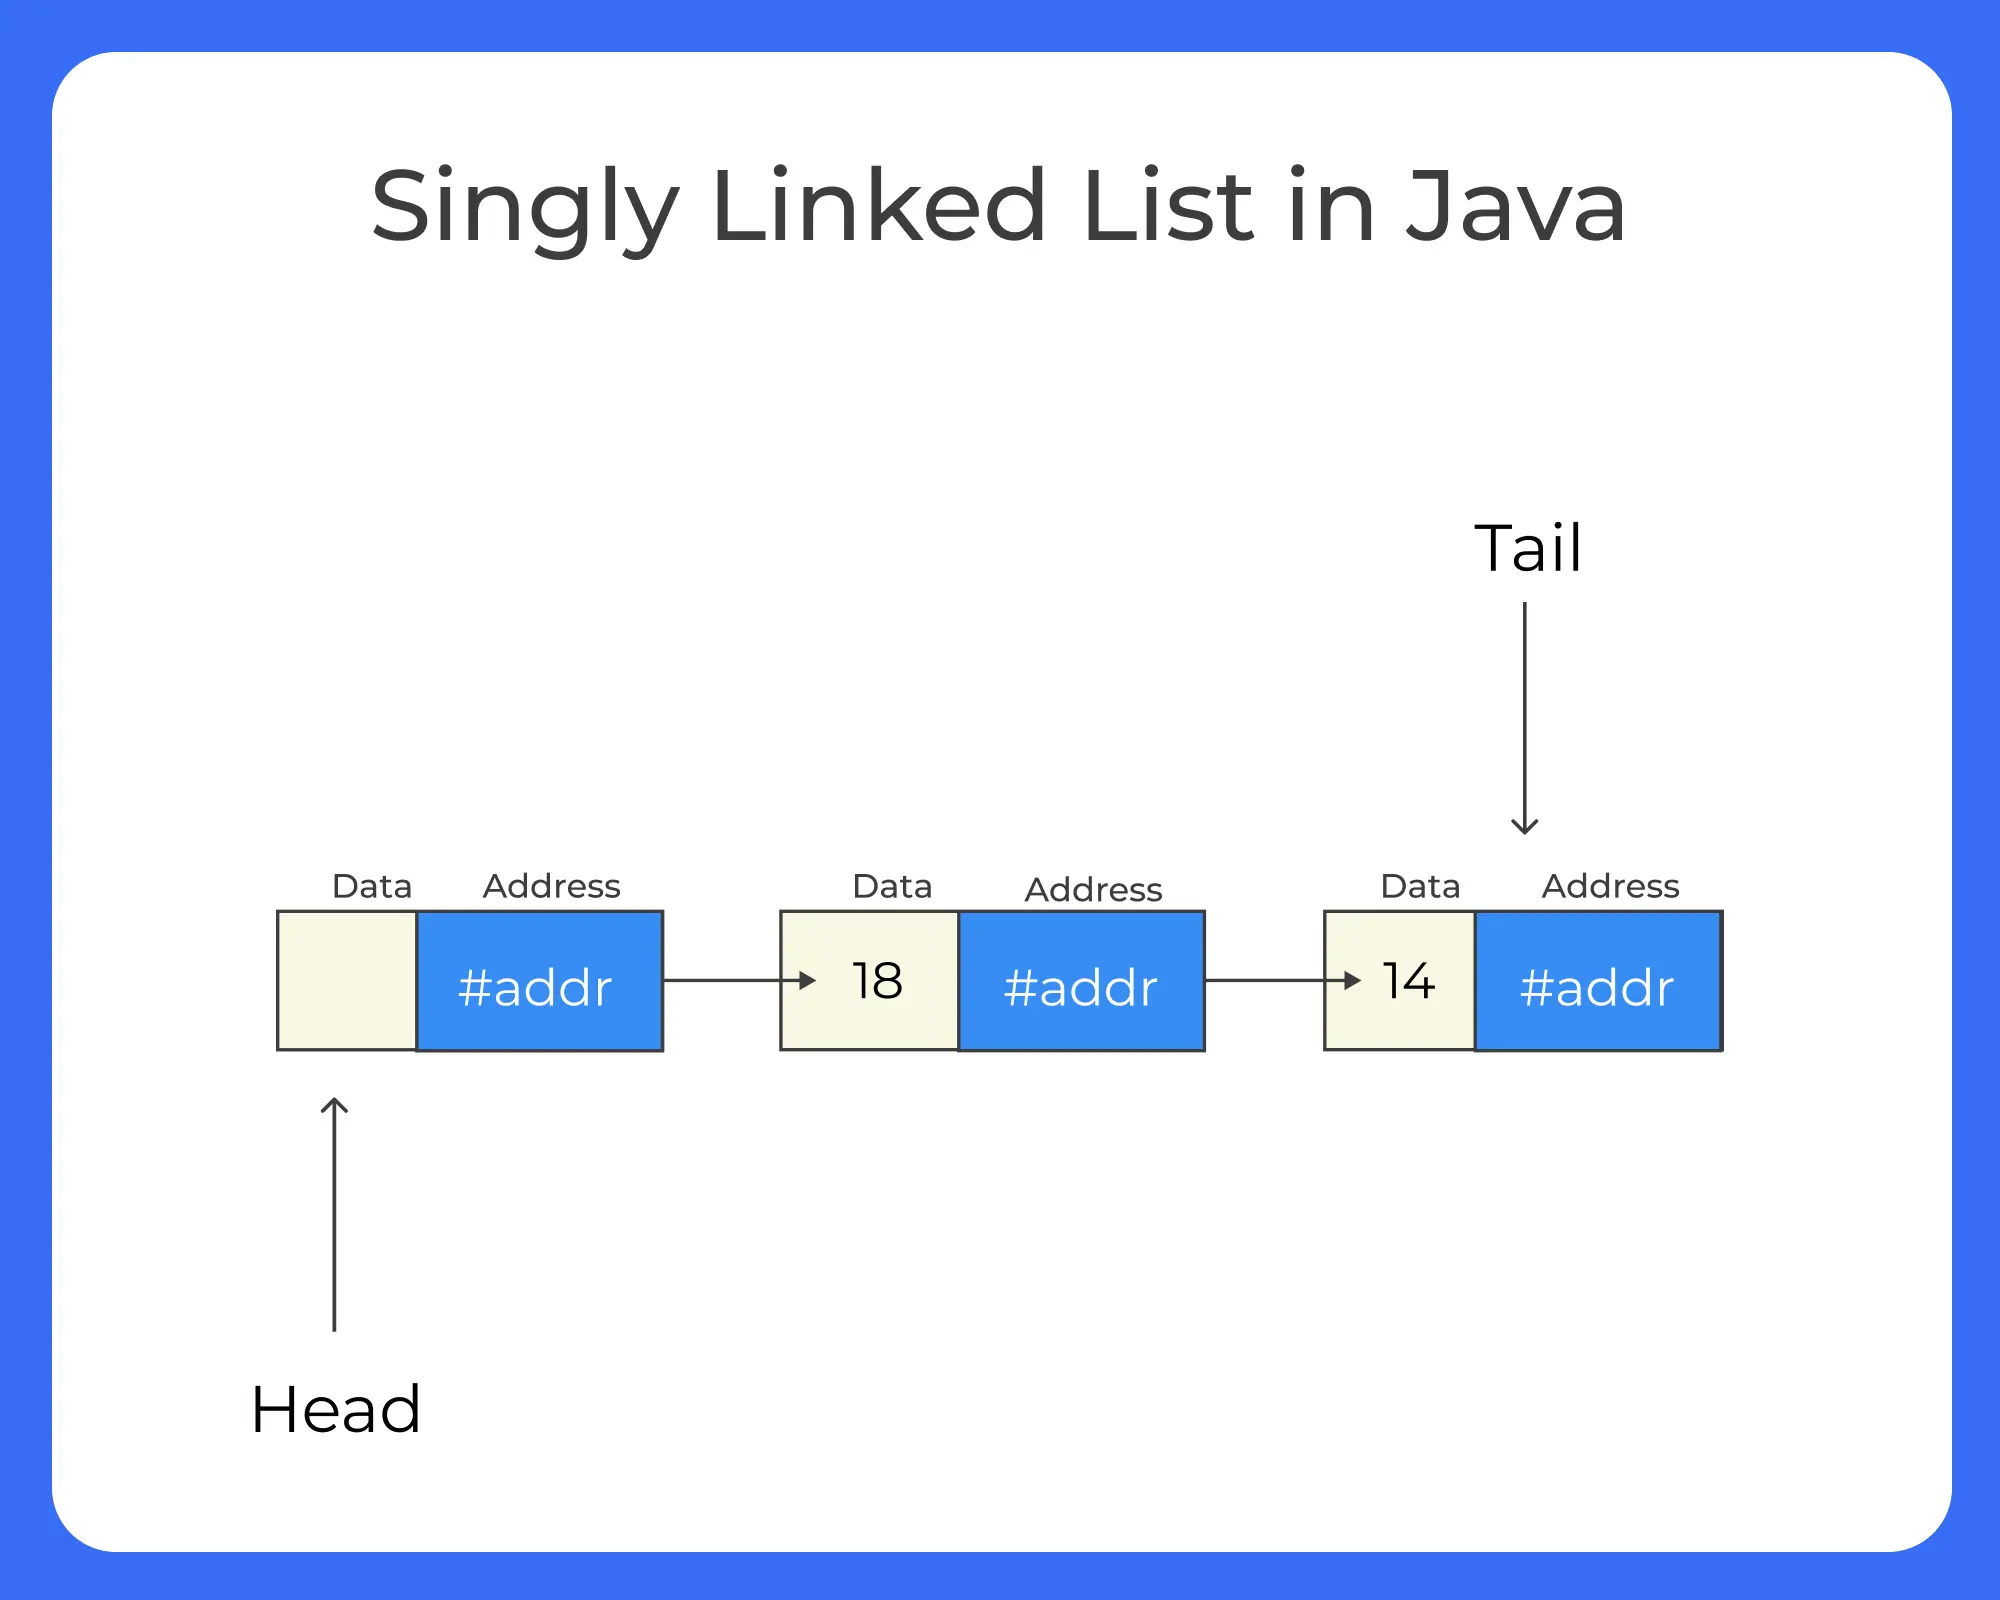 Singly linked list in Java